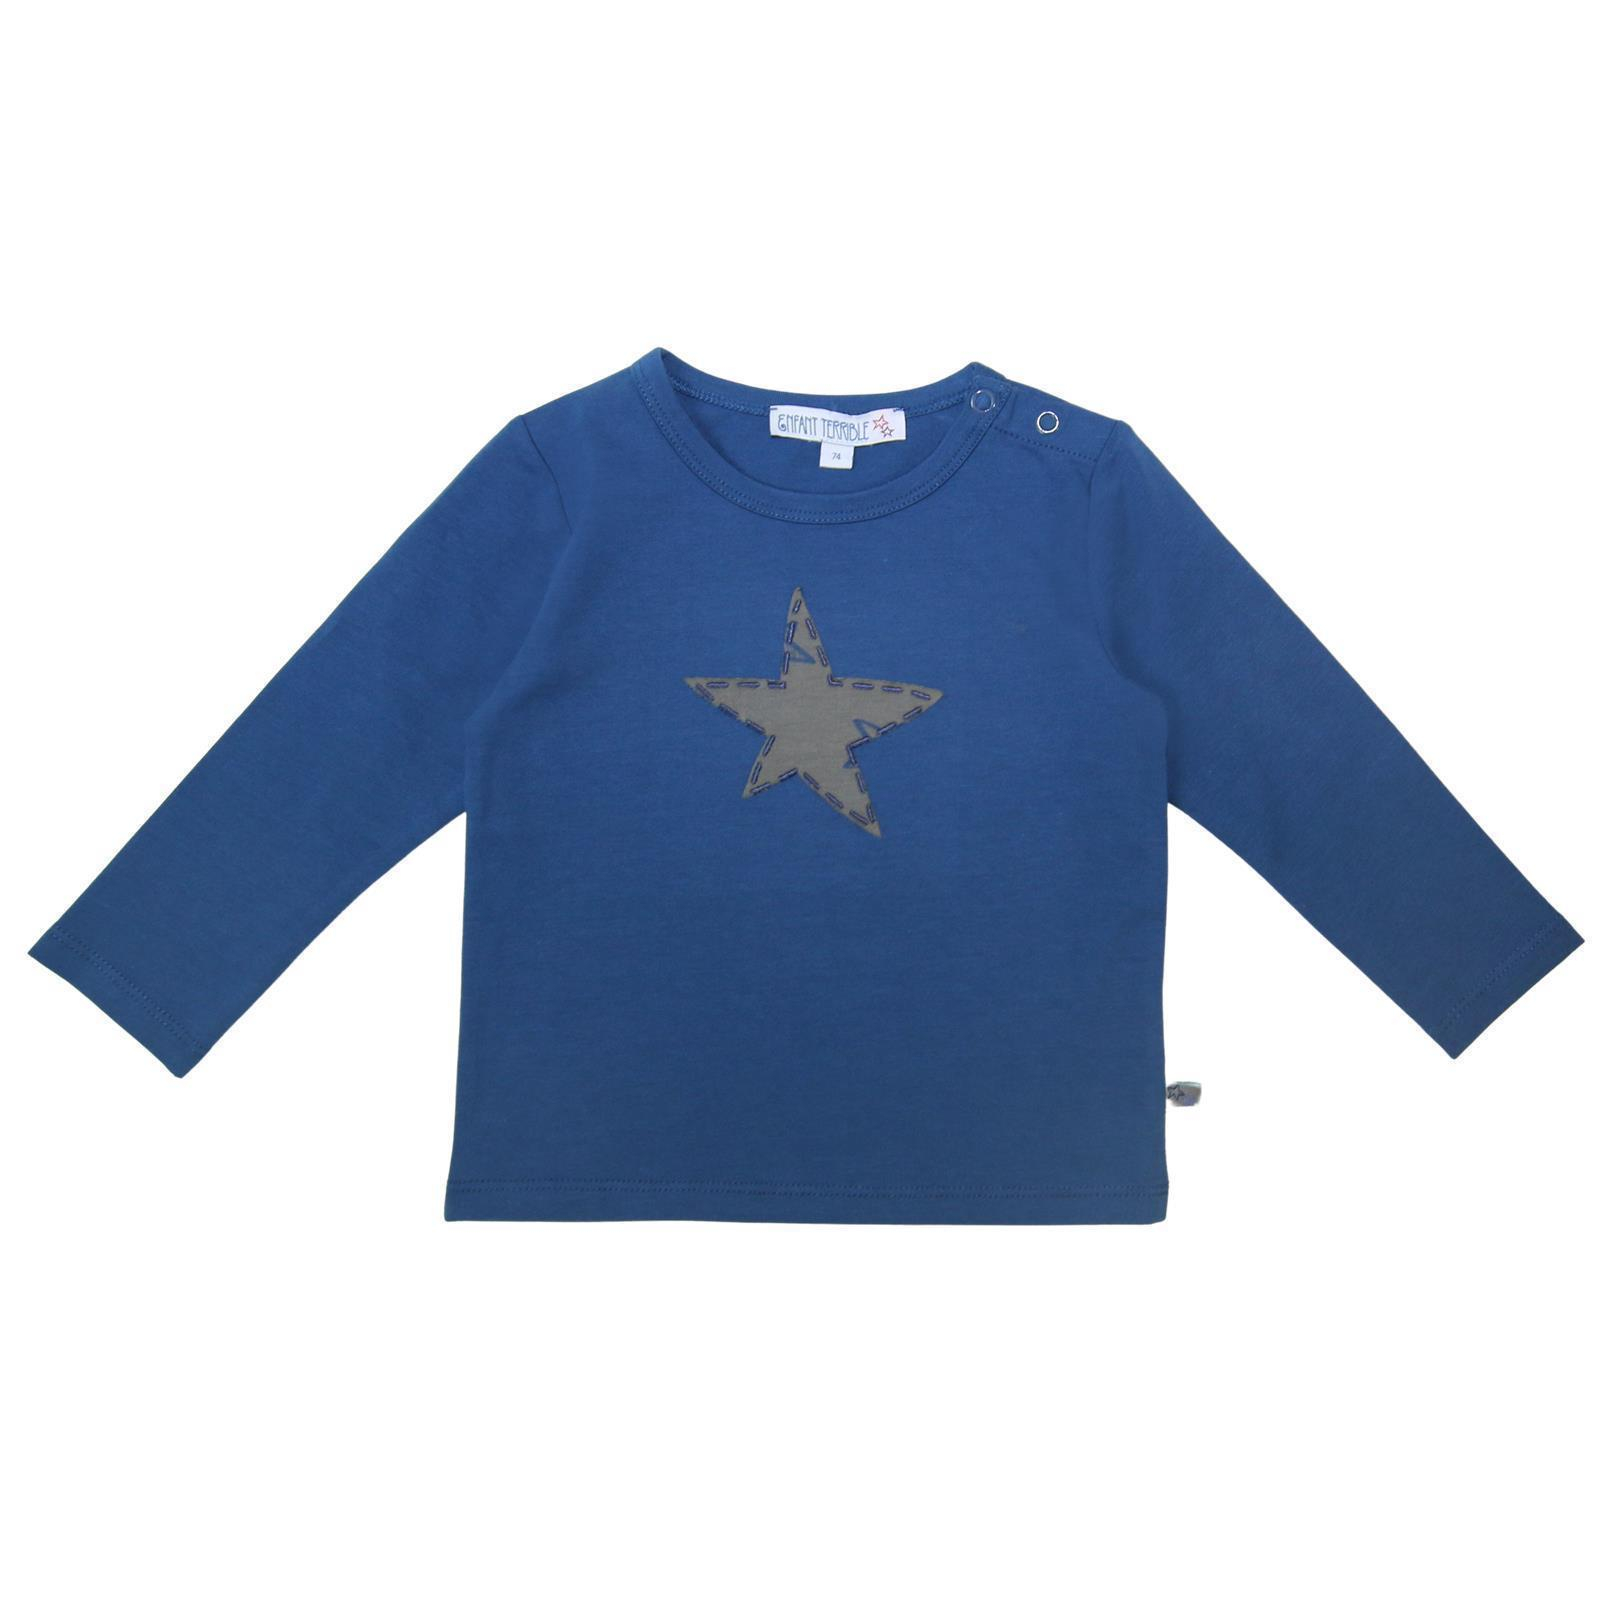 Enfant Terrible, Baby T-Shirt, Stern Applikation, tintenblau, 11.61 CHF